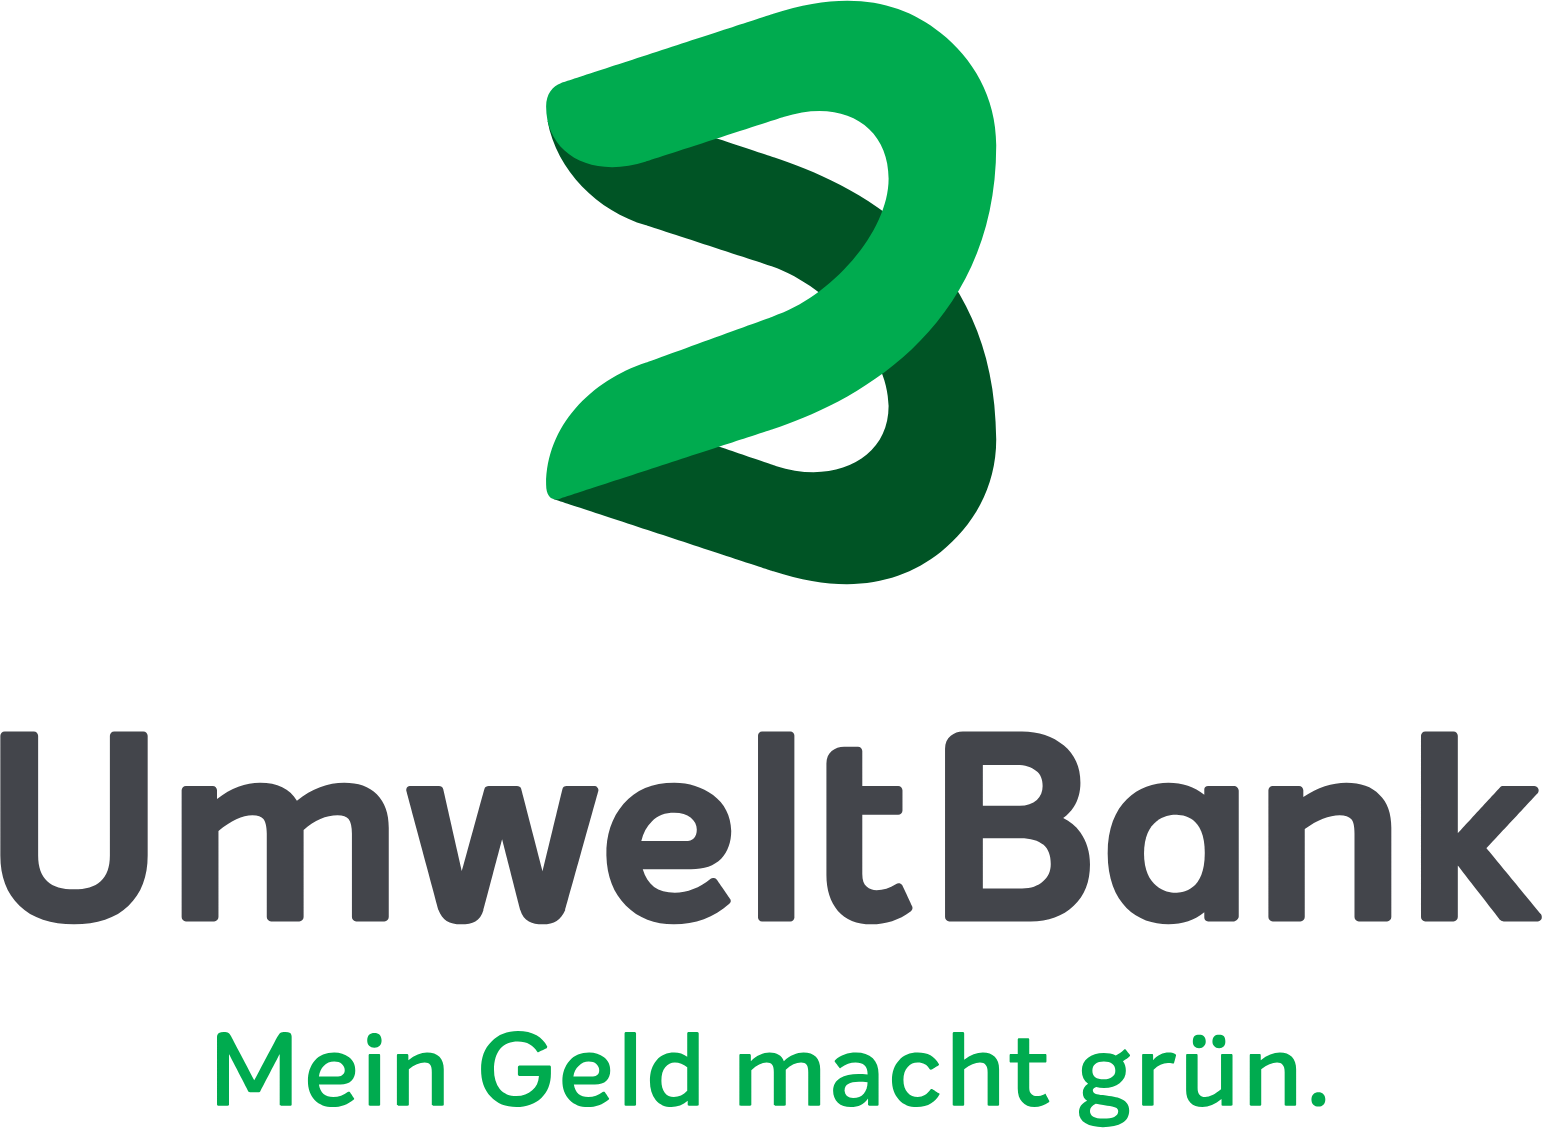 UmweltBank logo large (transparent PNG)